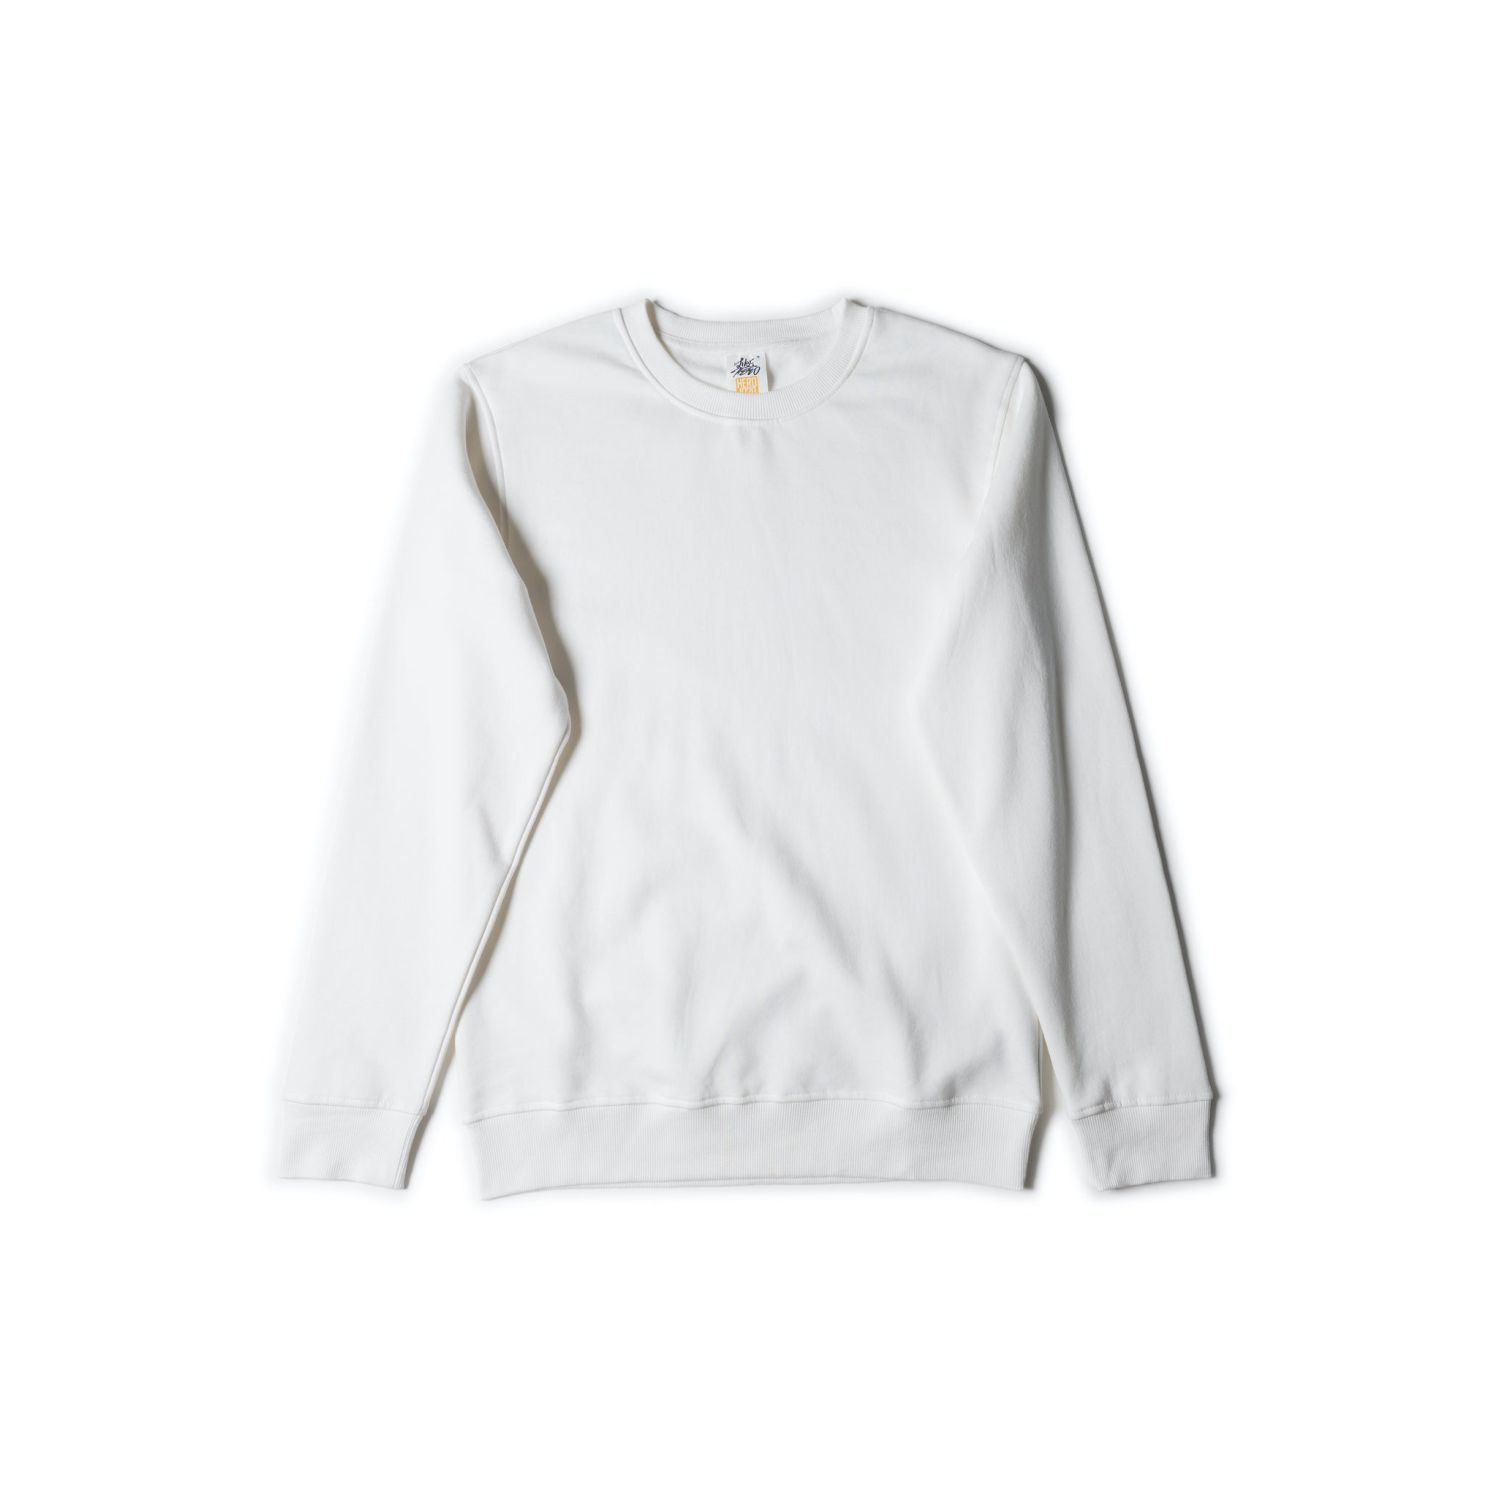 Just Like Hero Crewneck Sweatshirt #1020 White